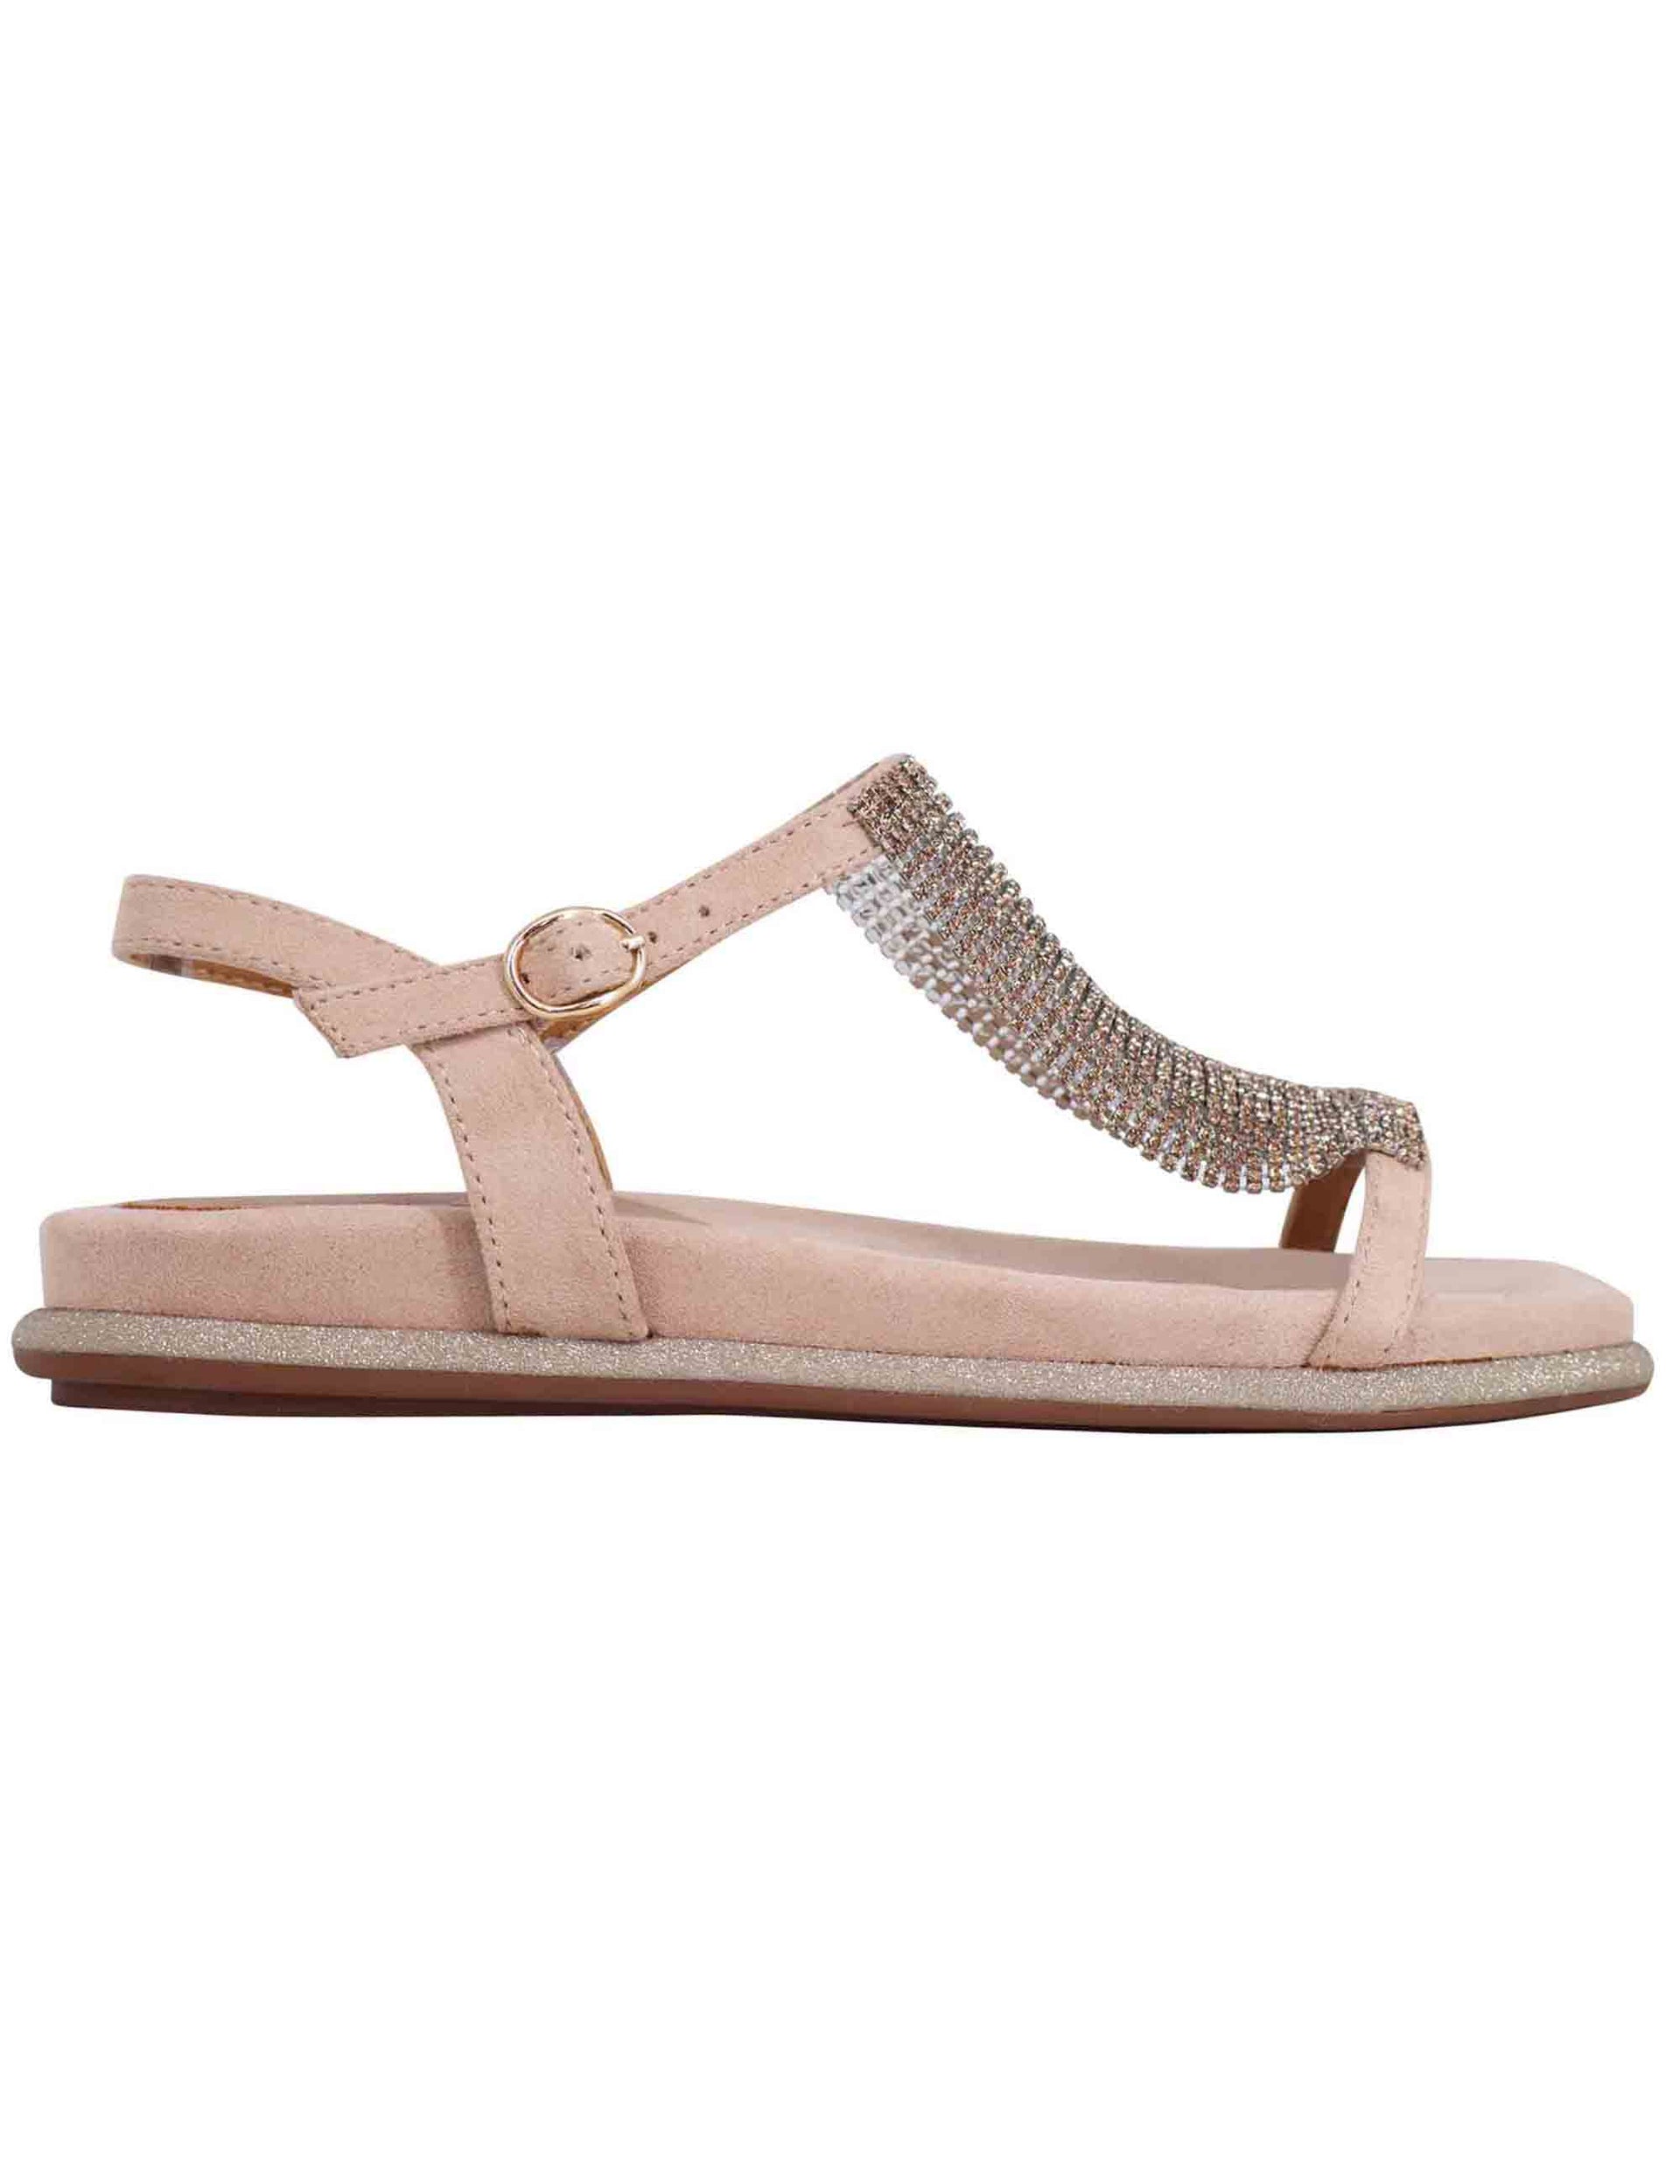 Women's flat sandals in beige eco suede with rhinestones and fussbett